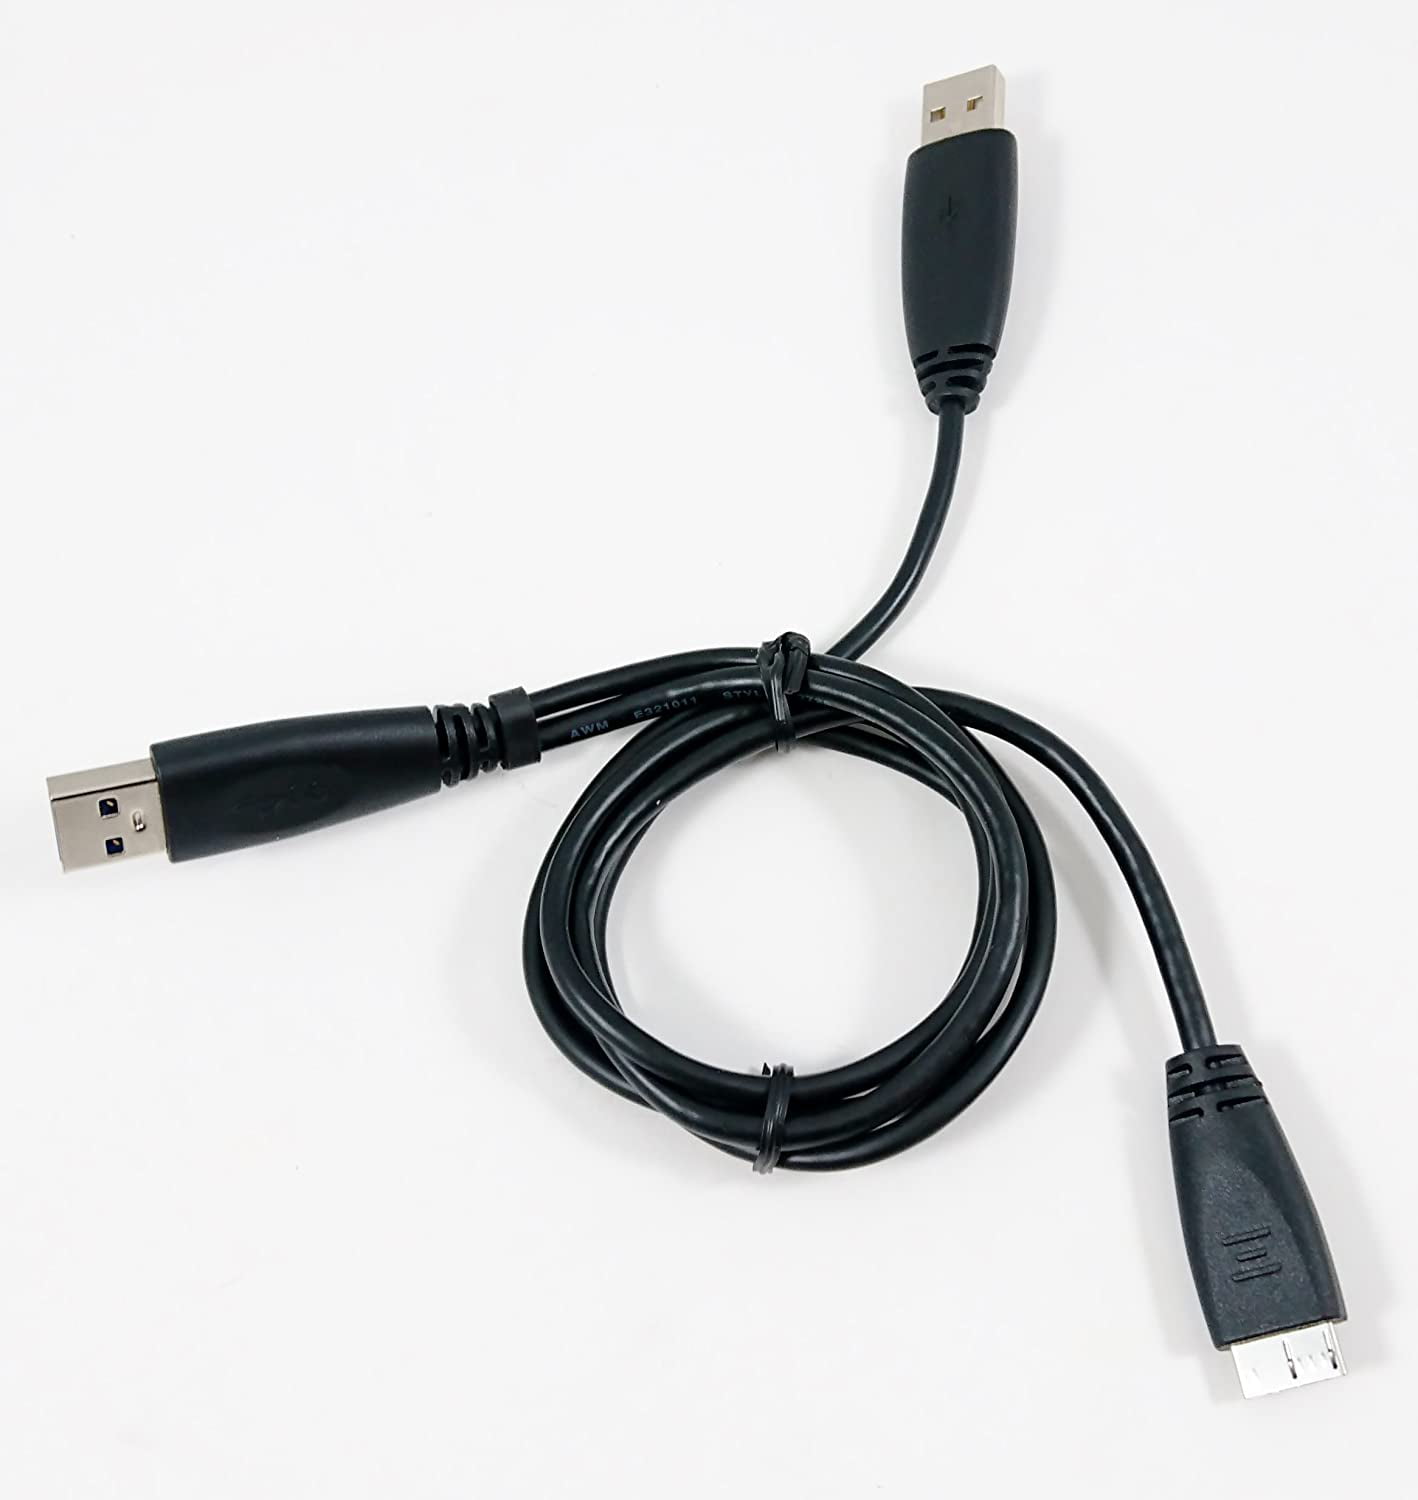 USB 3.0 Dual Power Shape 2 X Type a to Micro B Cable for External Hard Drives (Seagate/Toshiba/WD/Hitachi/Samsung & Wii U) - Walmart.com